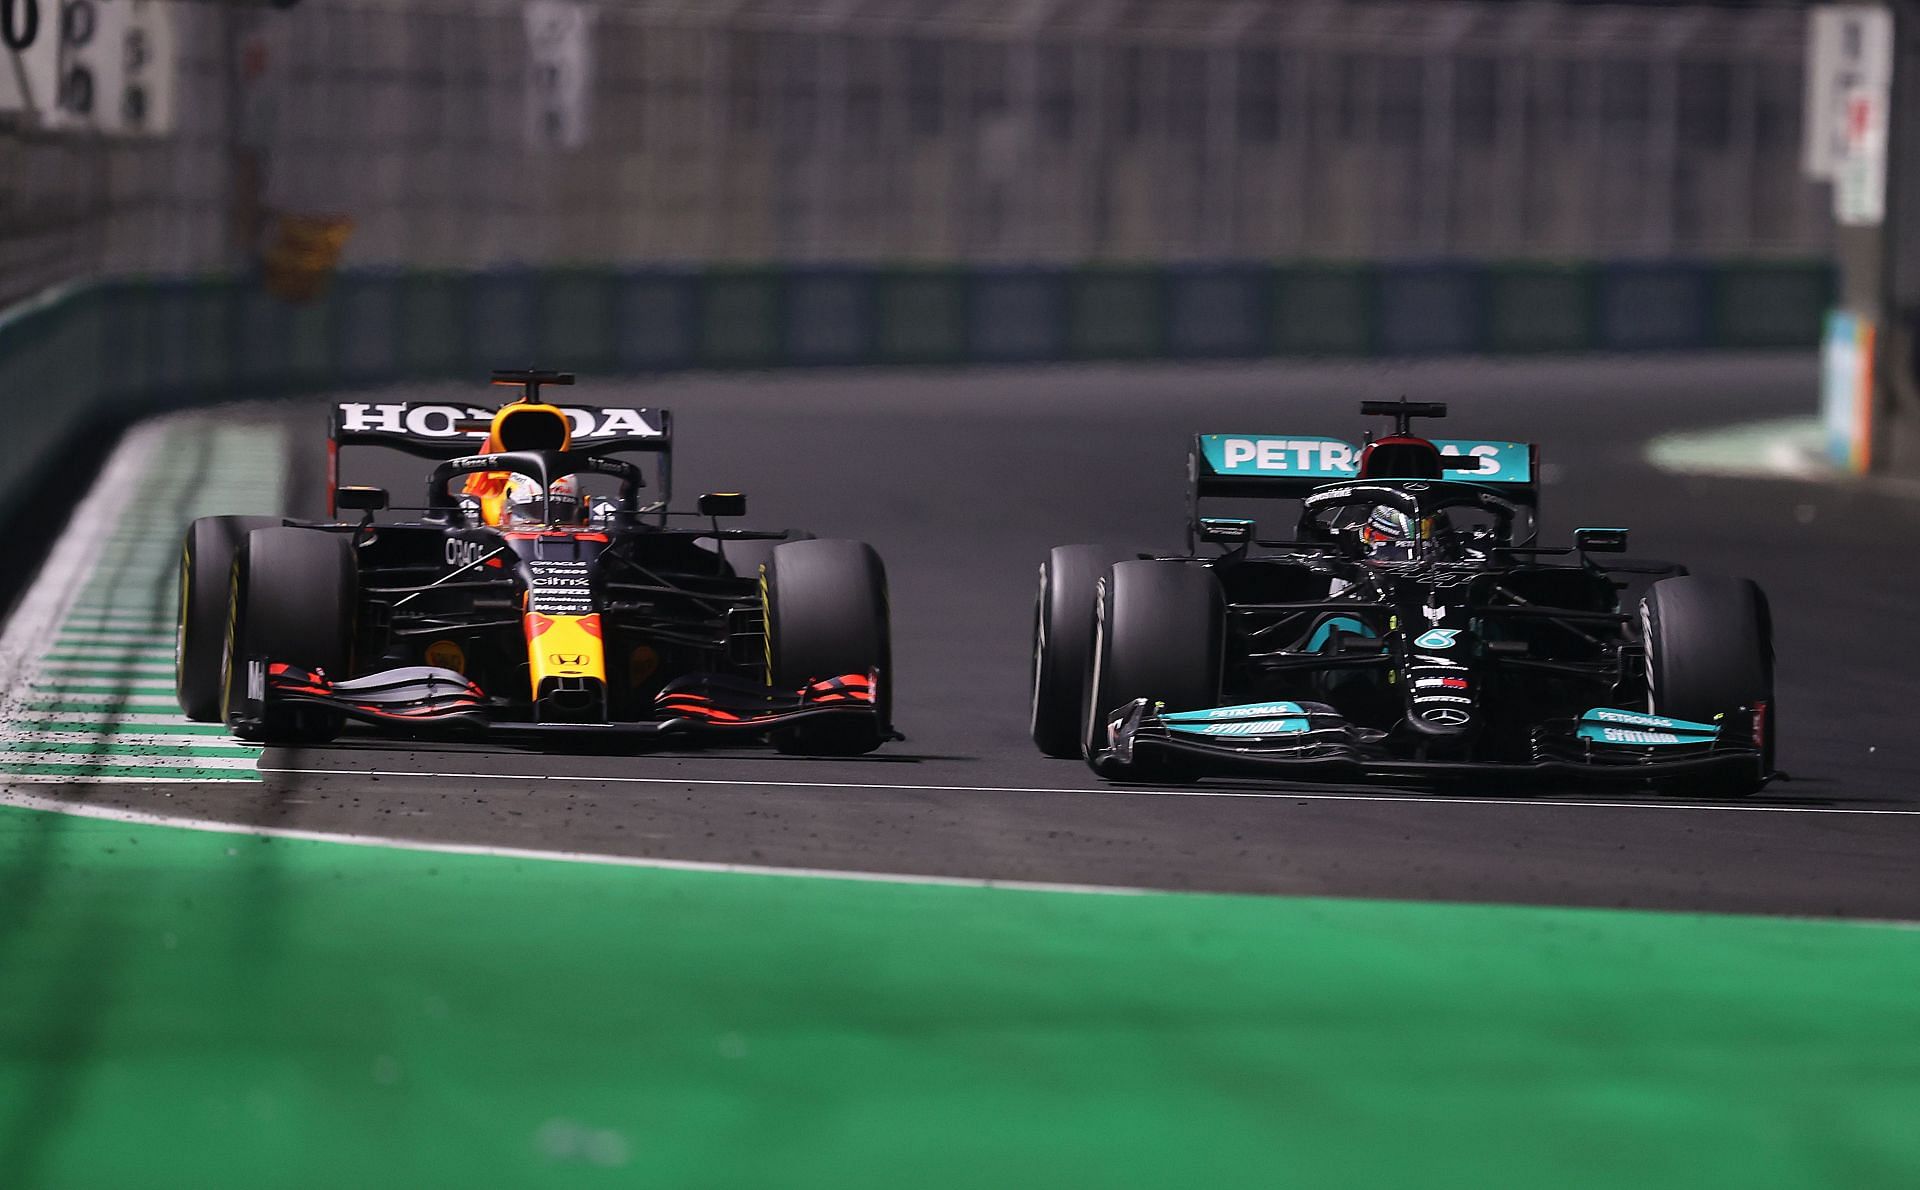 Max Verstappen (left) and Lewis Hamilton (right) at the F1 Grand Prix of Saudi Arabia